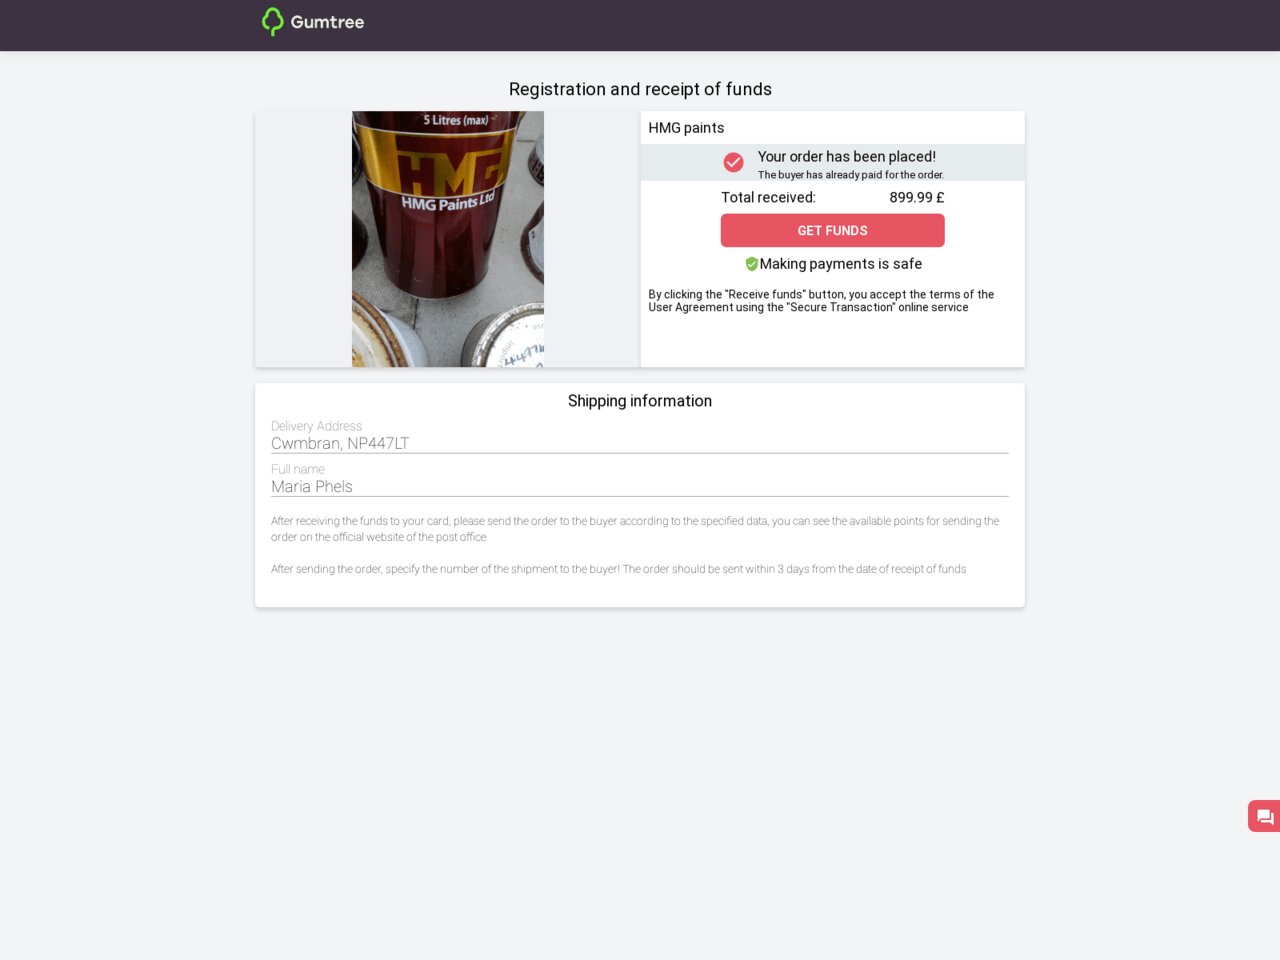 Phishing page targeting Gumtree users.